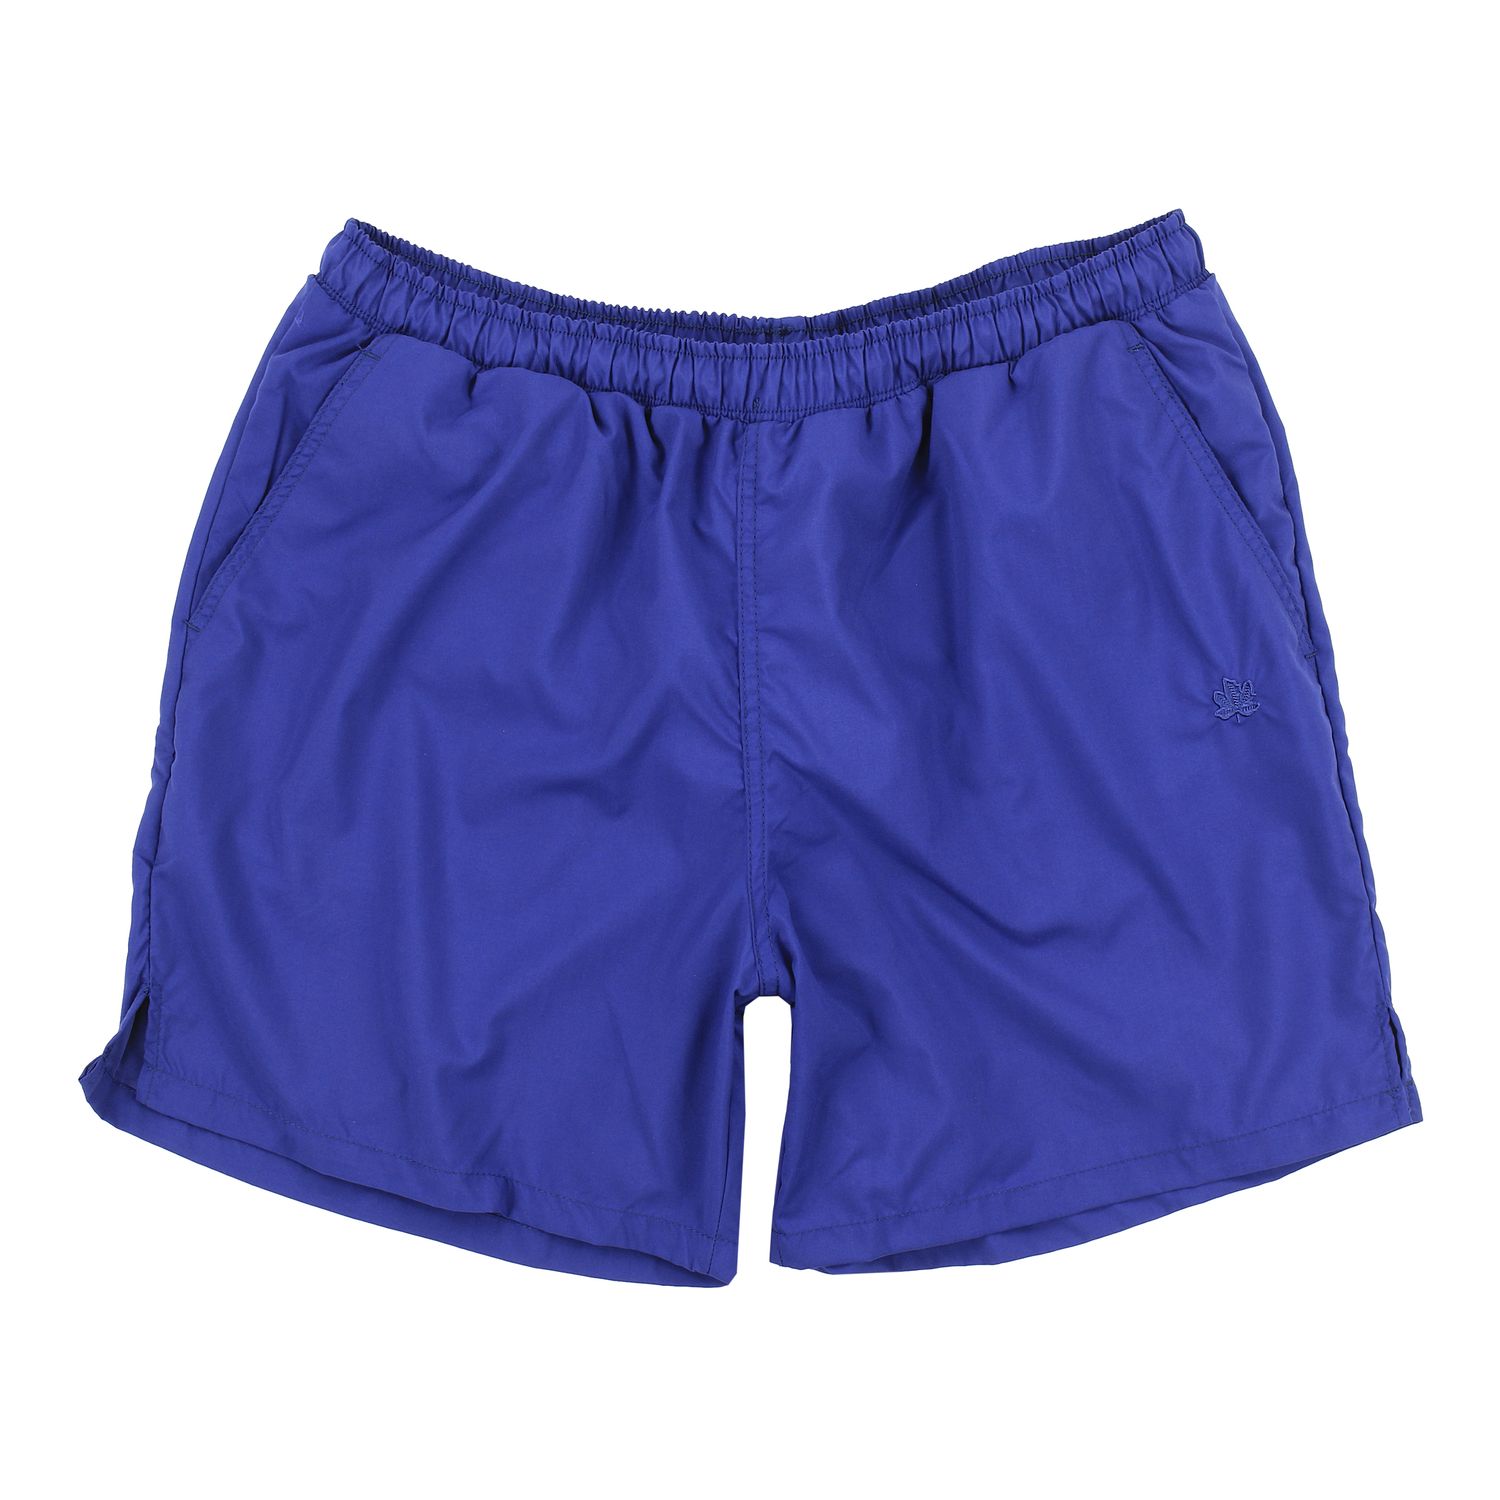 Short sportif Ahorn Sportswear grandes tailles jusqu'au 10XL // bleu royal